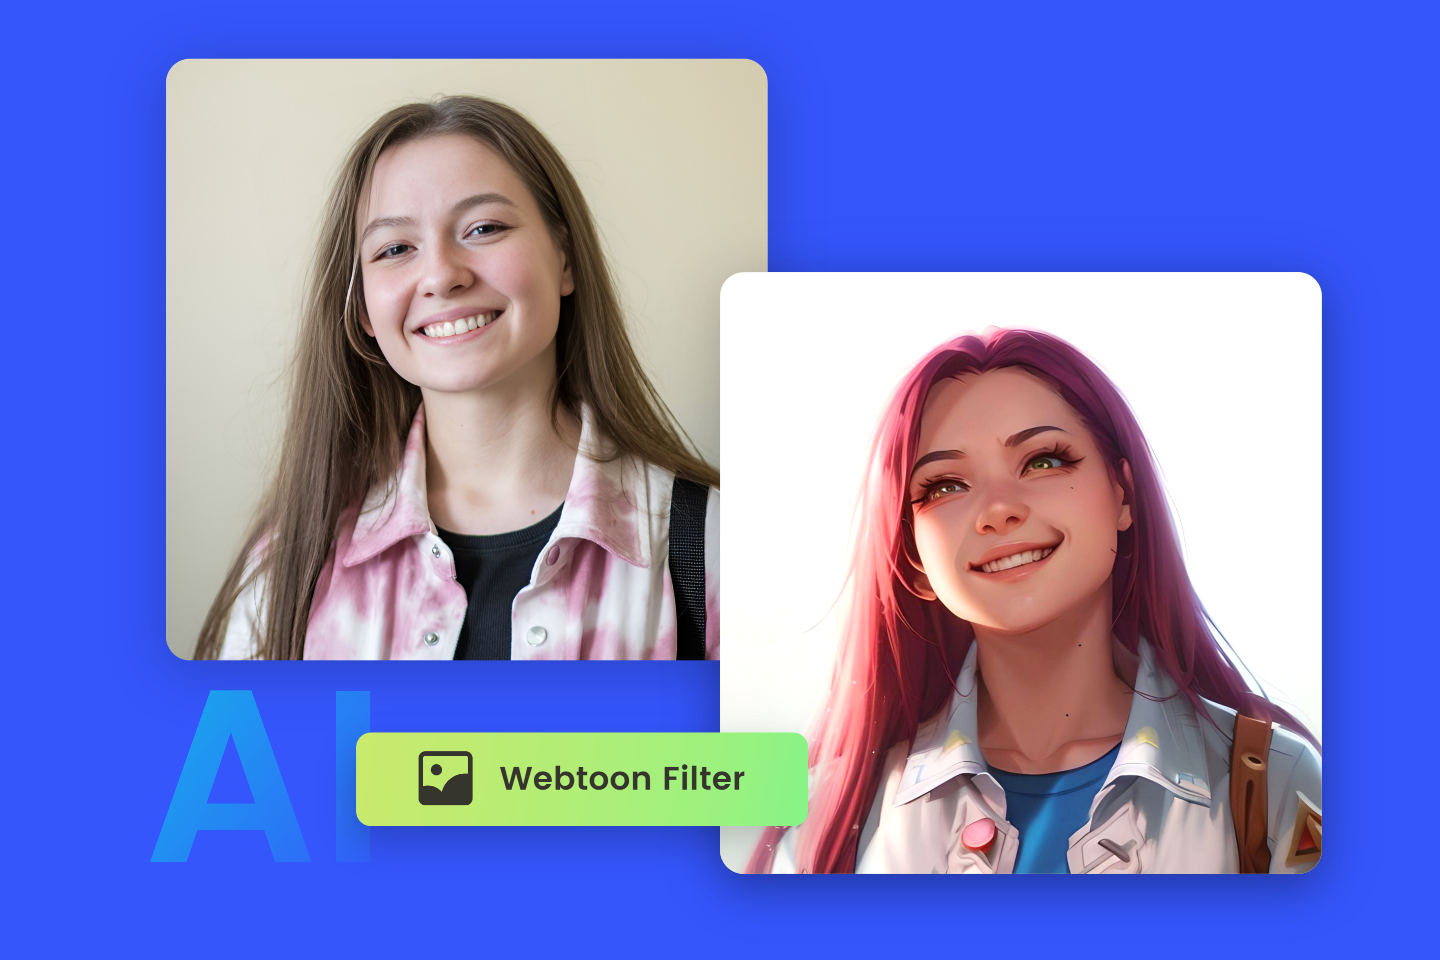 Use fotor online webtoon filter to transform female selfie into the webtoon style